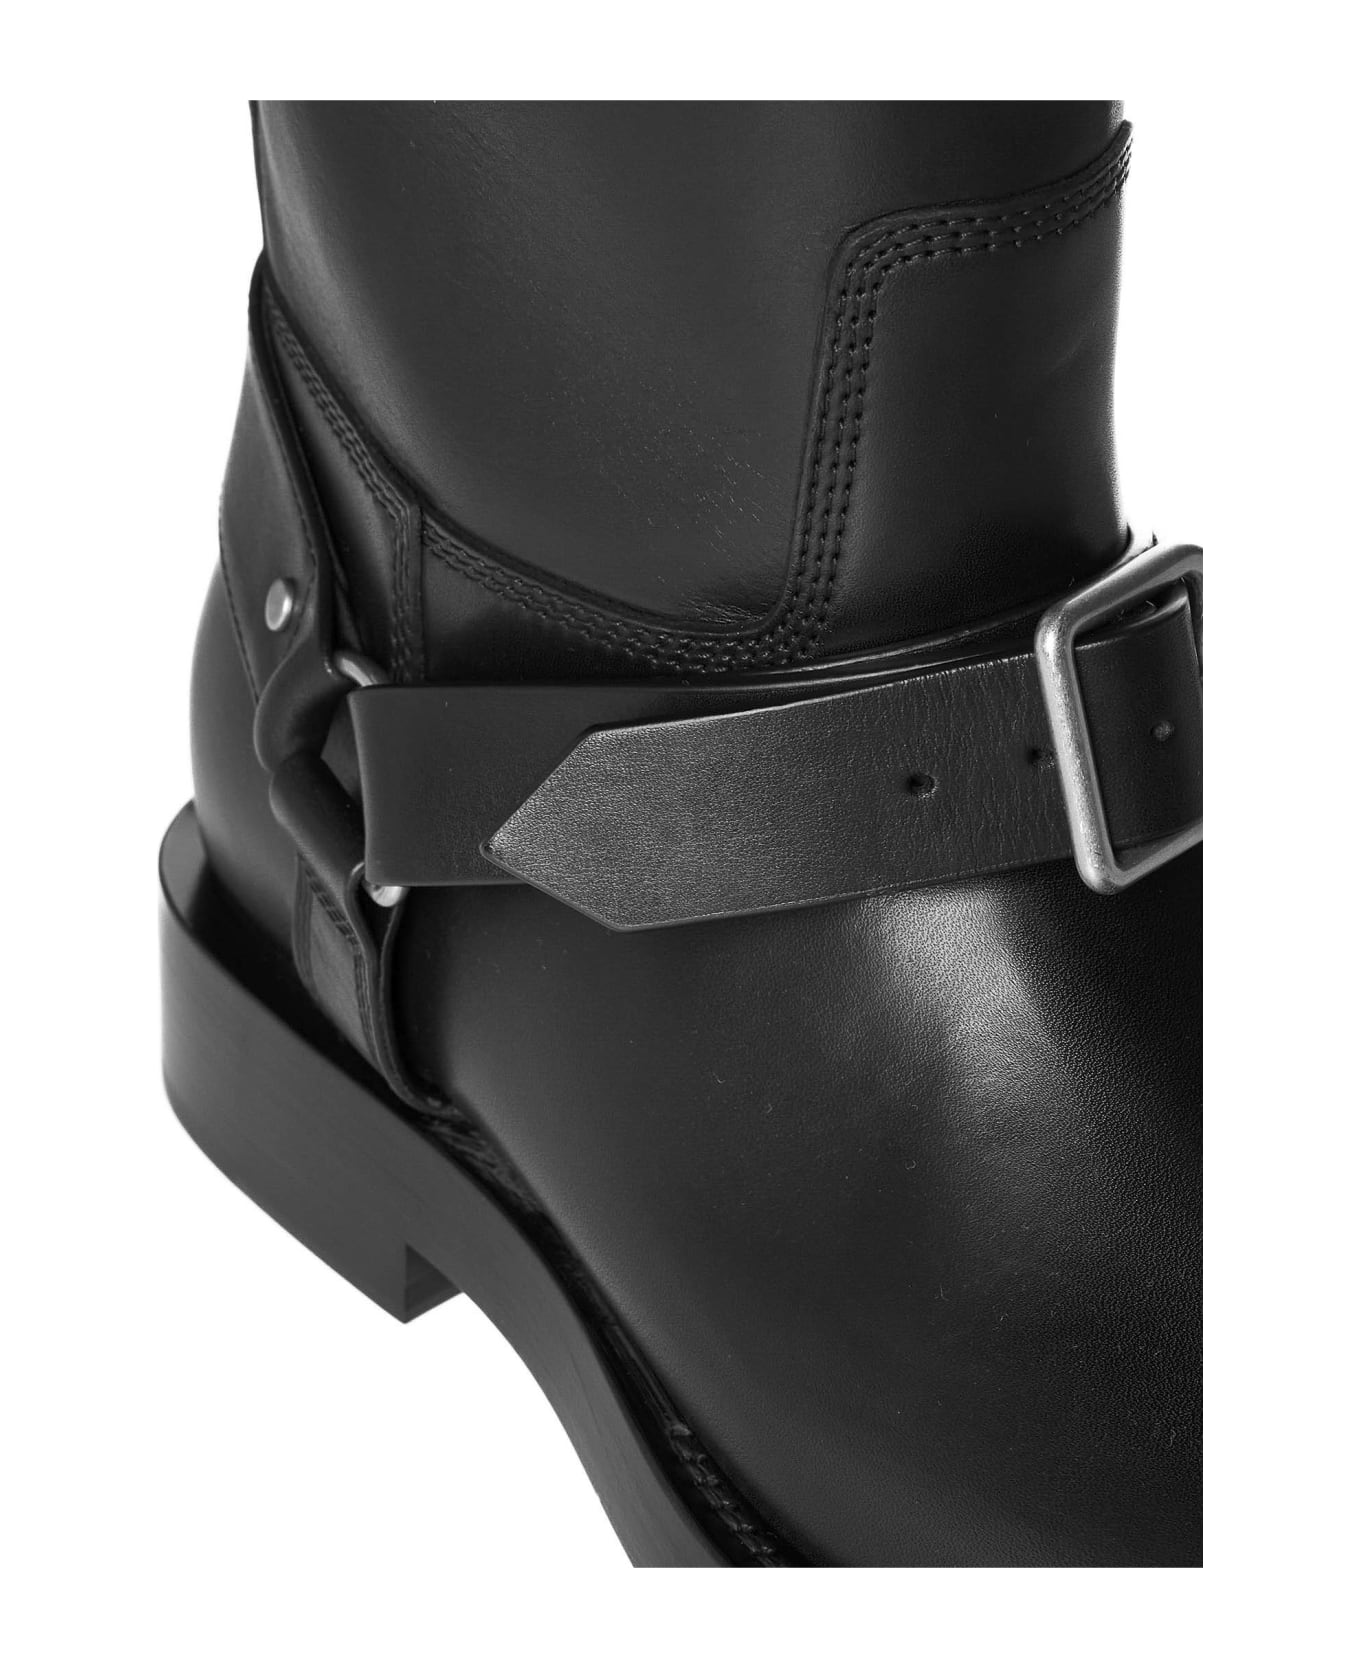 Burberry Saddle High Boots - Black ブーツ